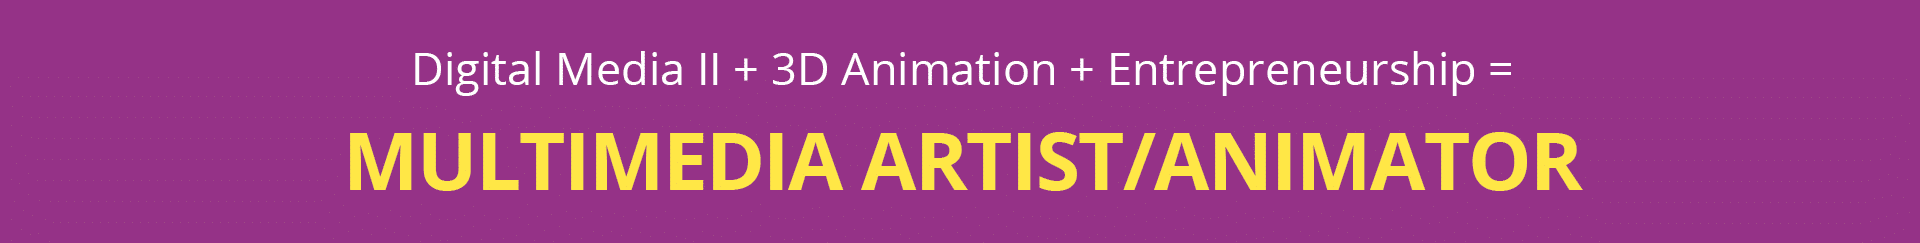 Multimedia Artist/Animator